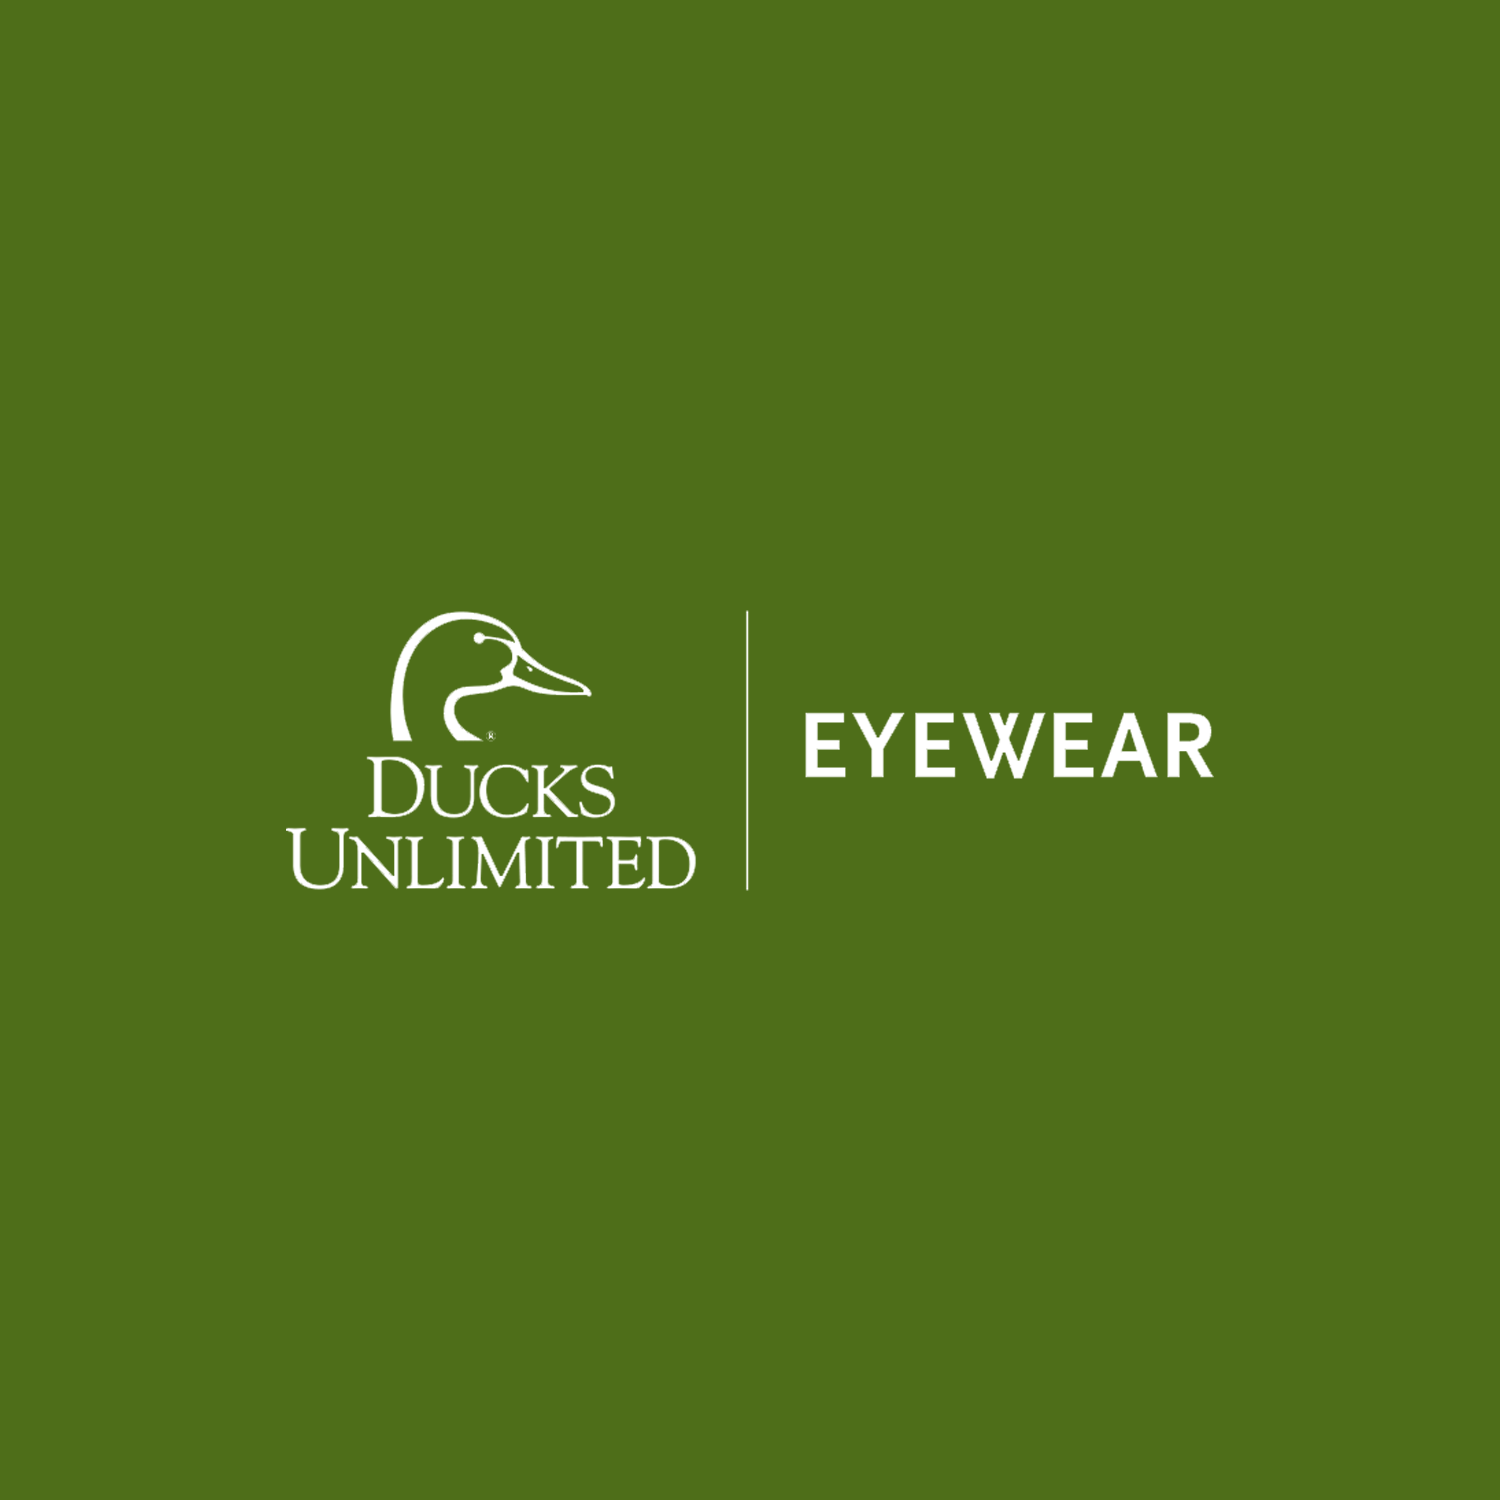 Ducks Unlimited Eyewear - The McGee Group